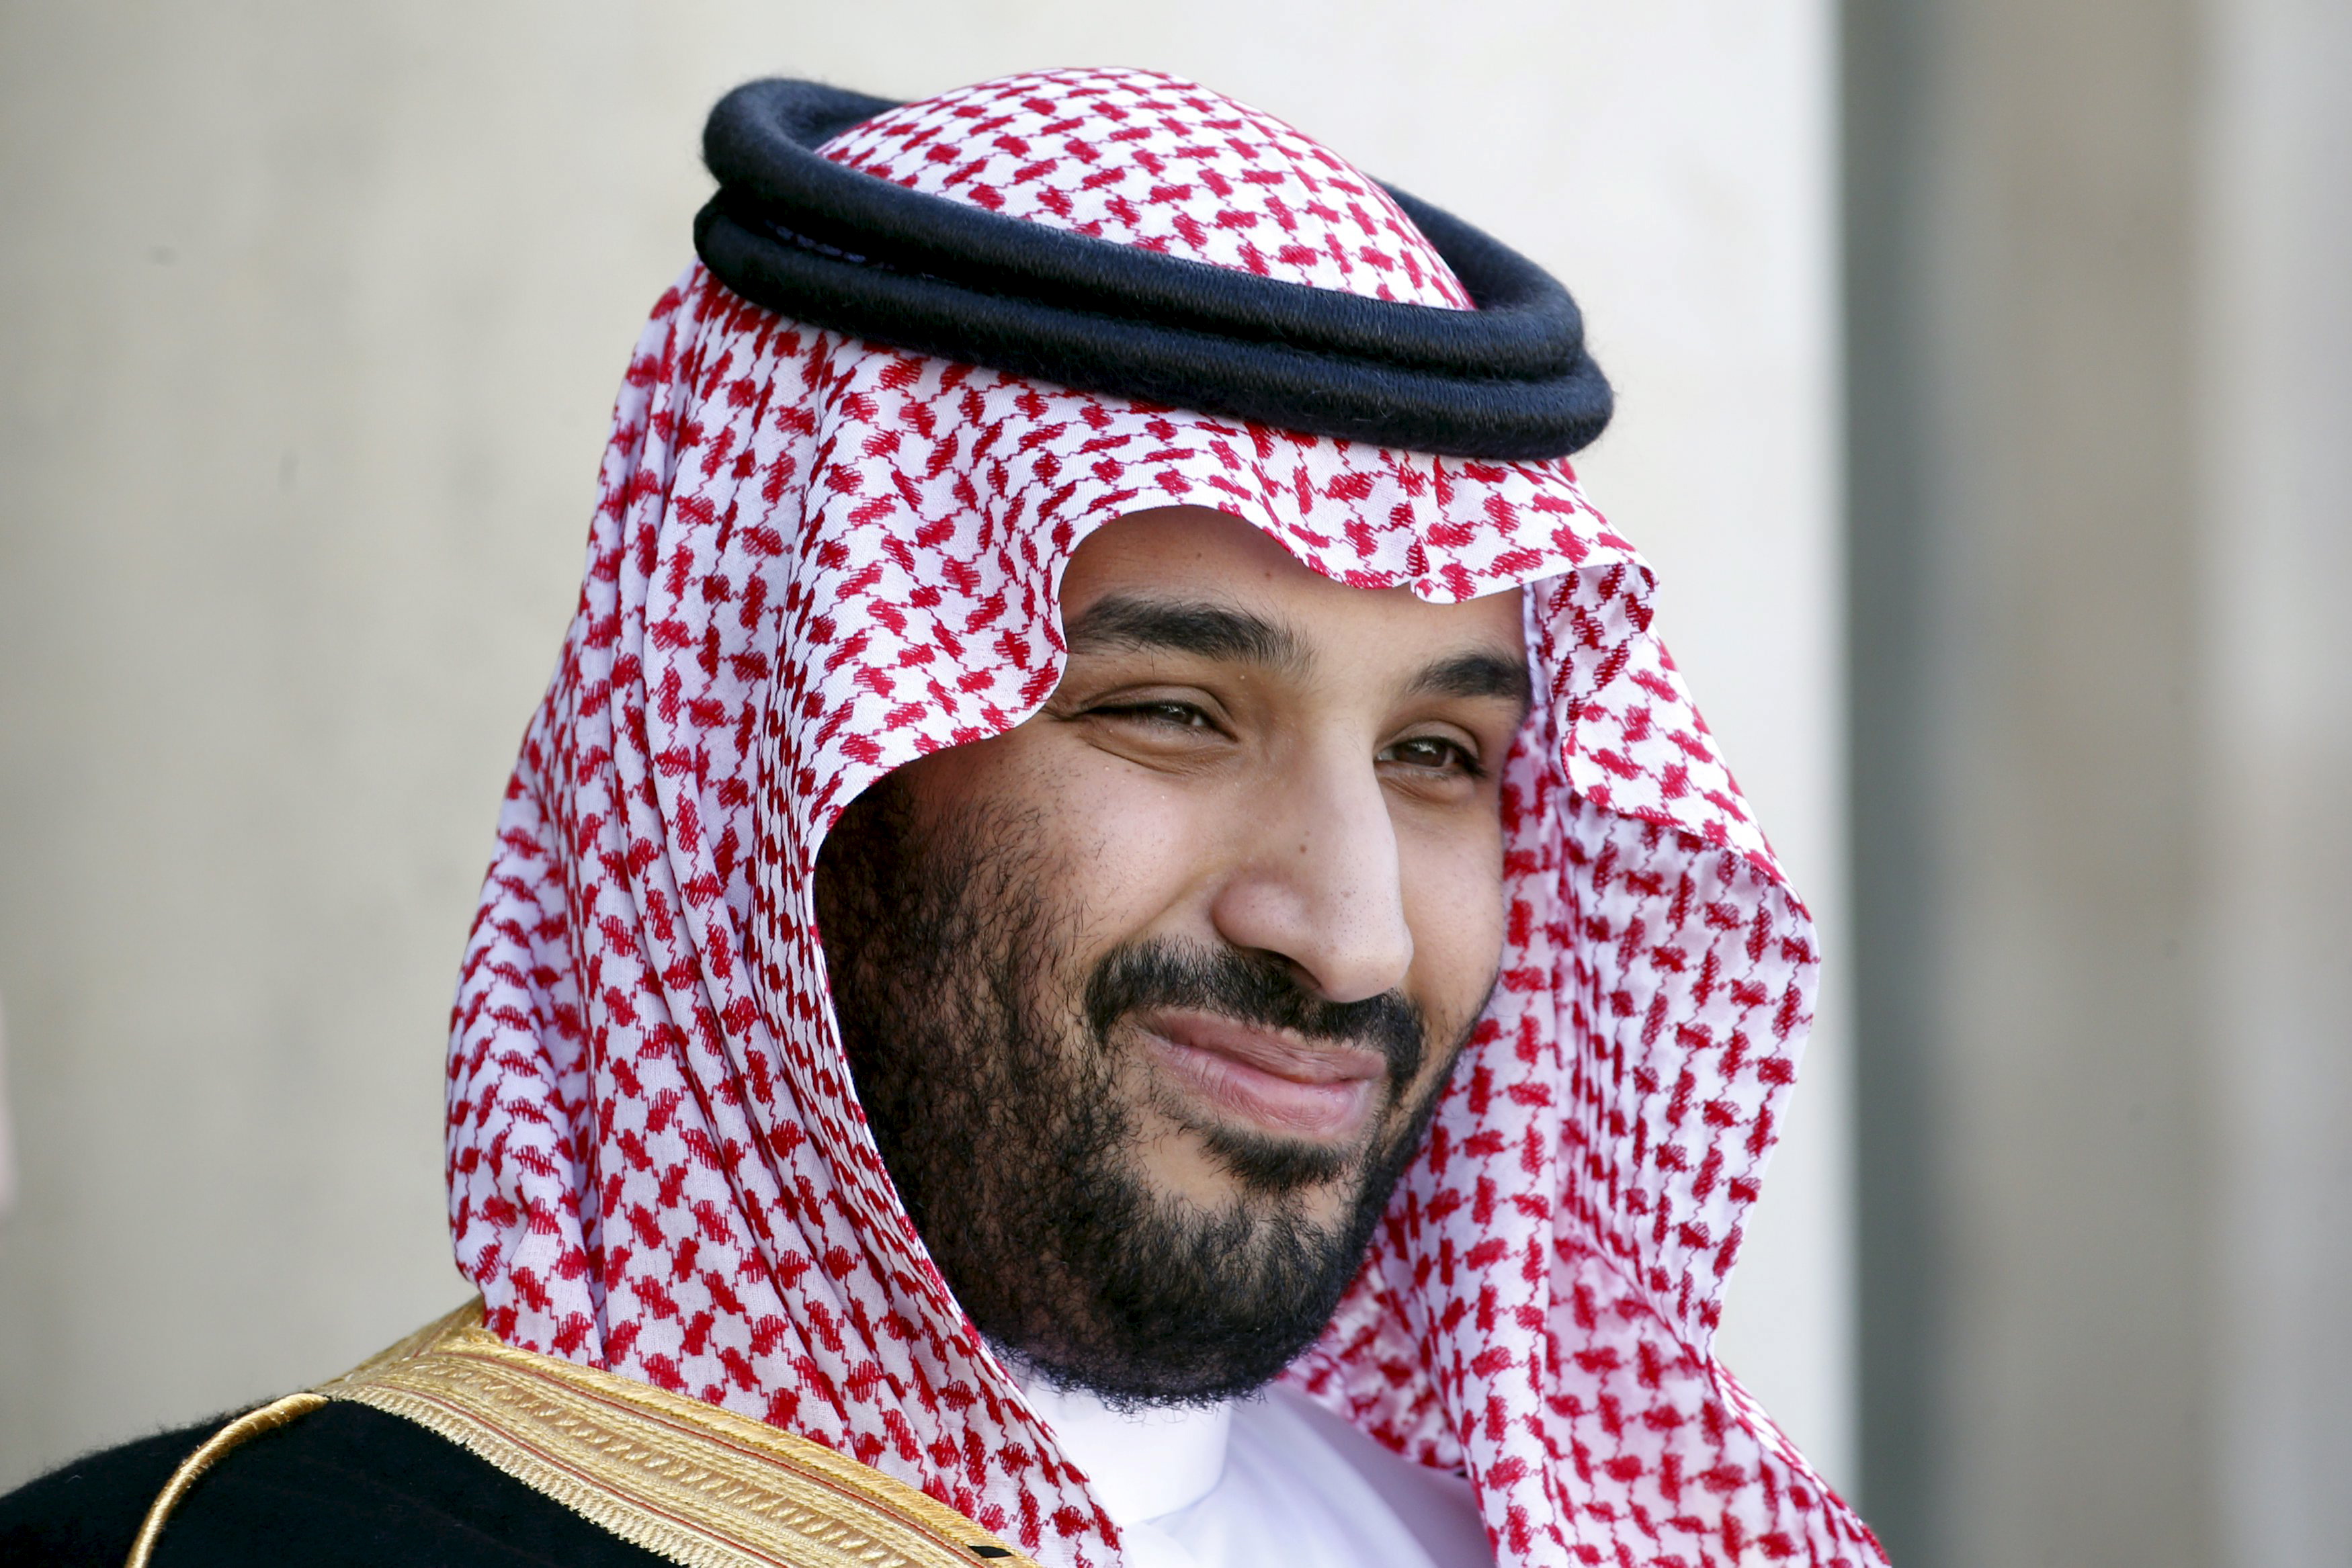 File photo of Saudi Arabia's Deputy Crown Prince Mohammed bin Salman reacting upon his arrival at the Elysee Palace in Paris